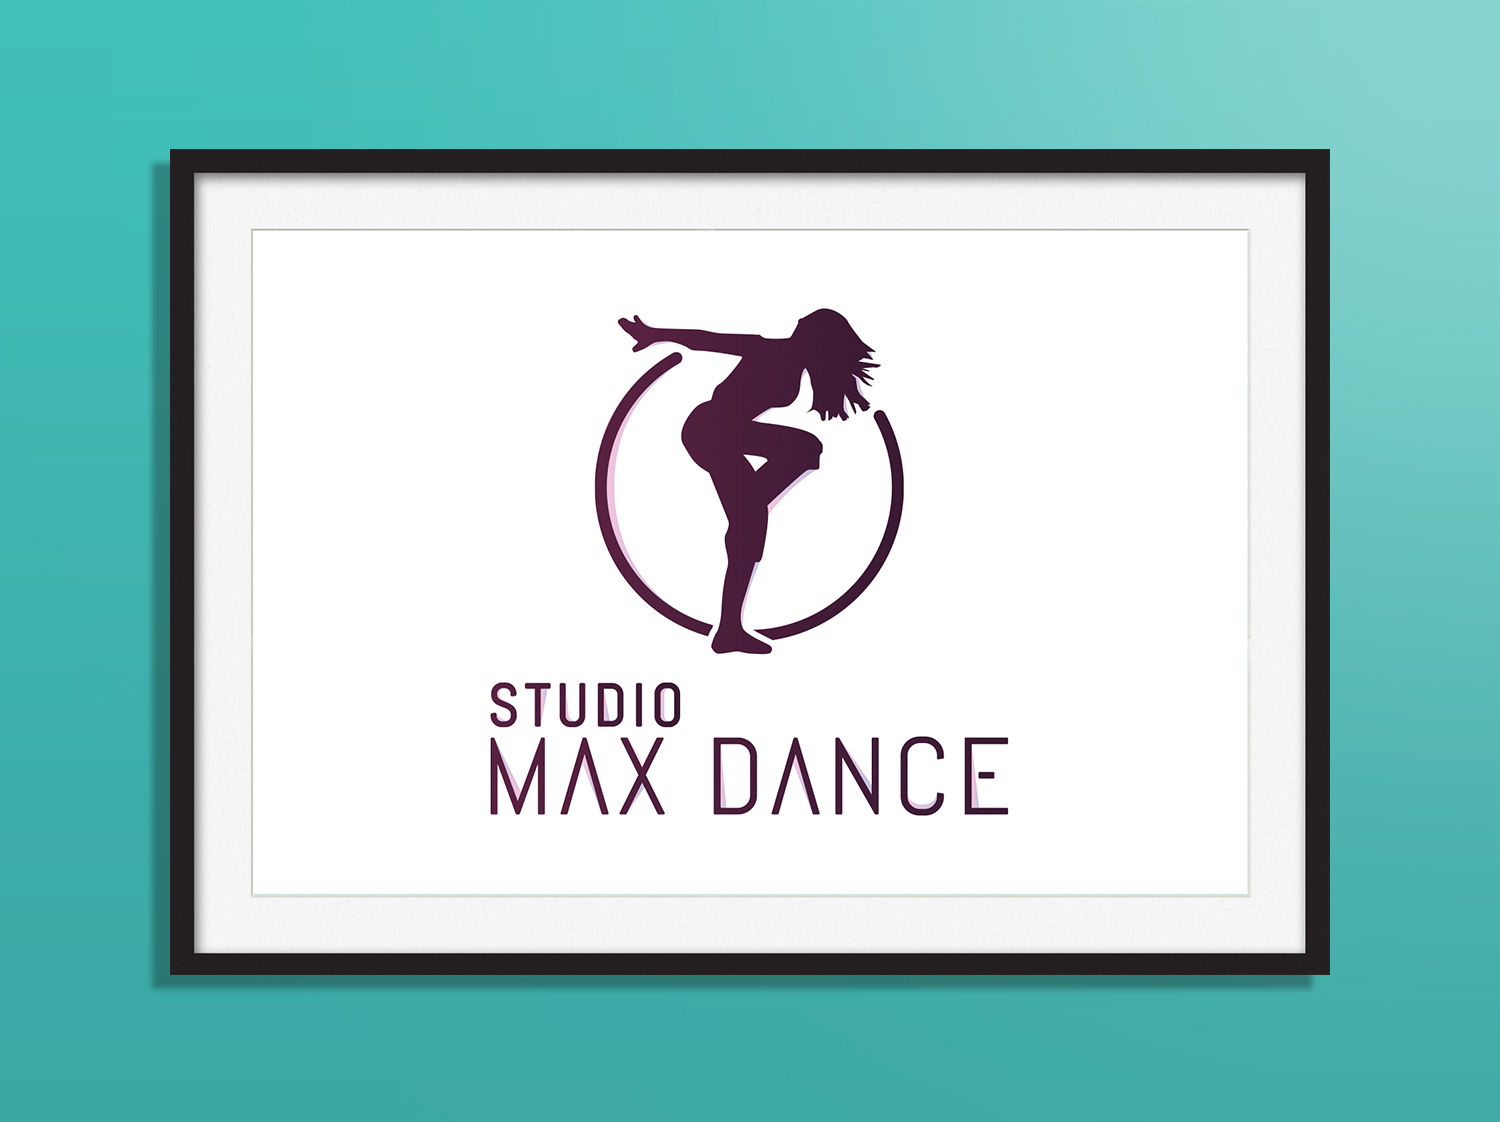 Studio max dance